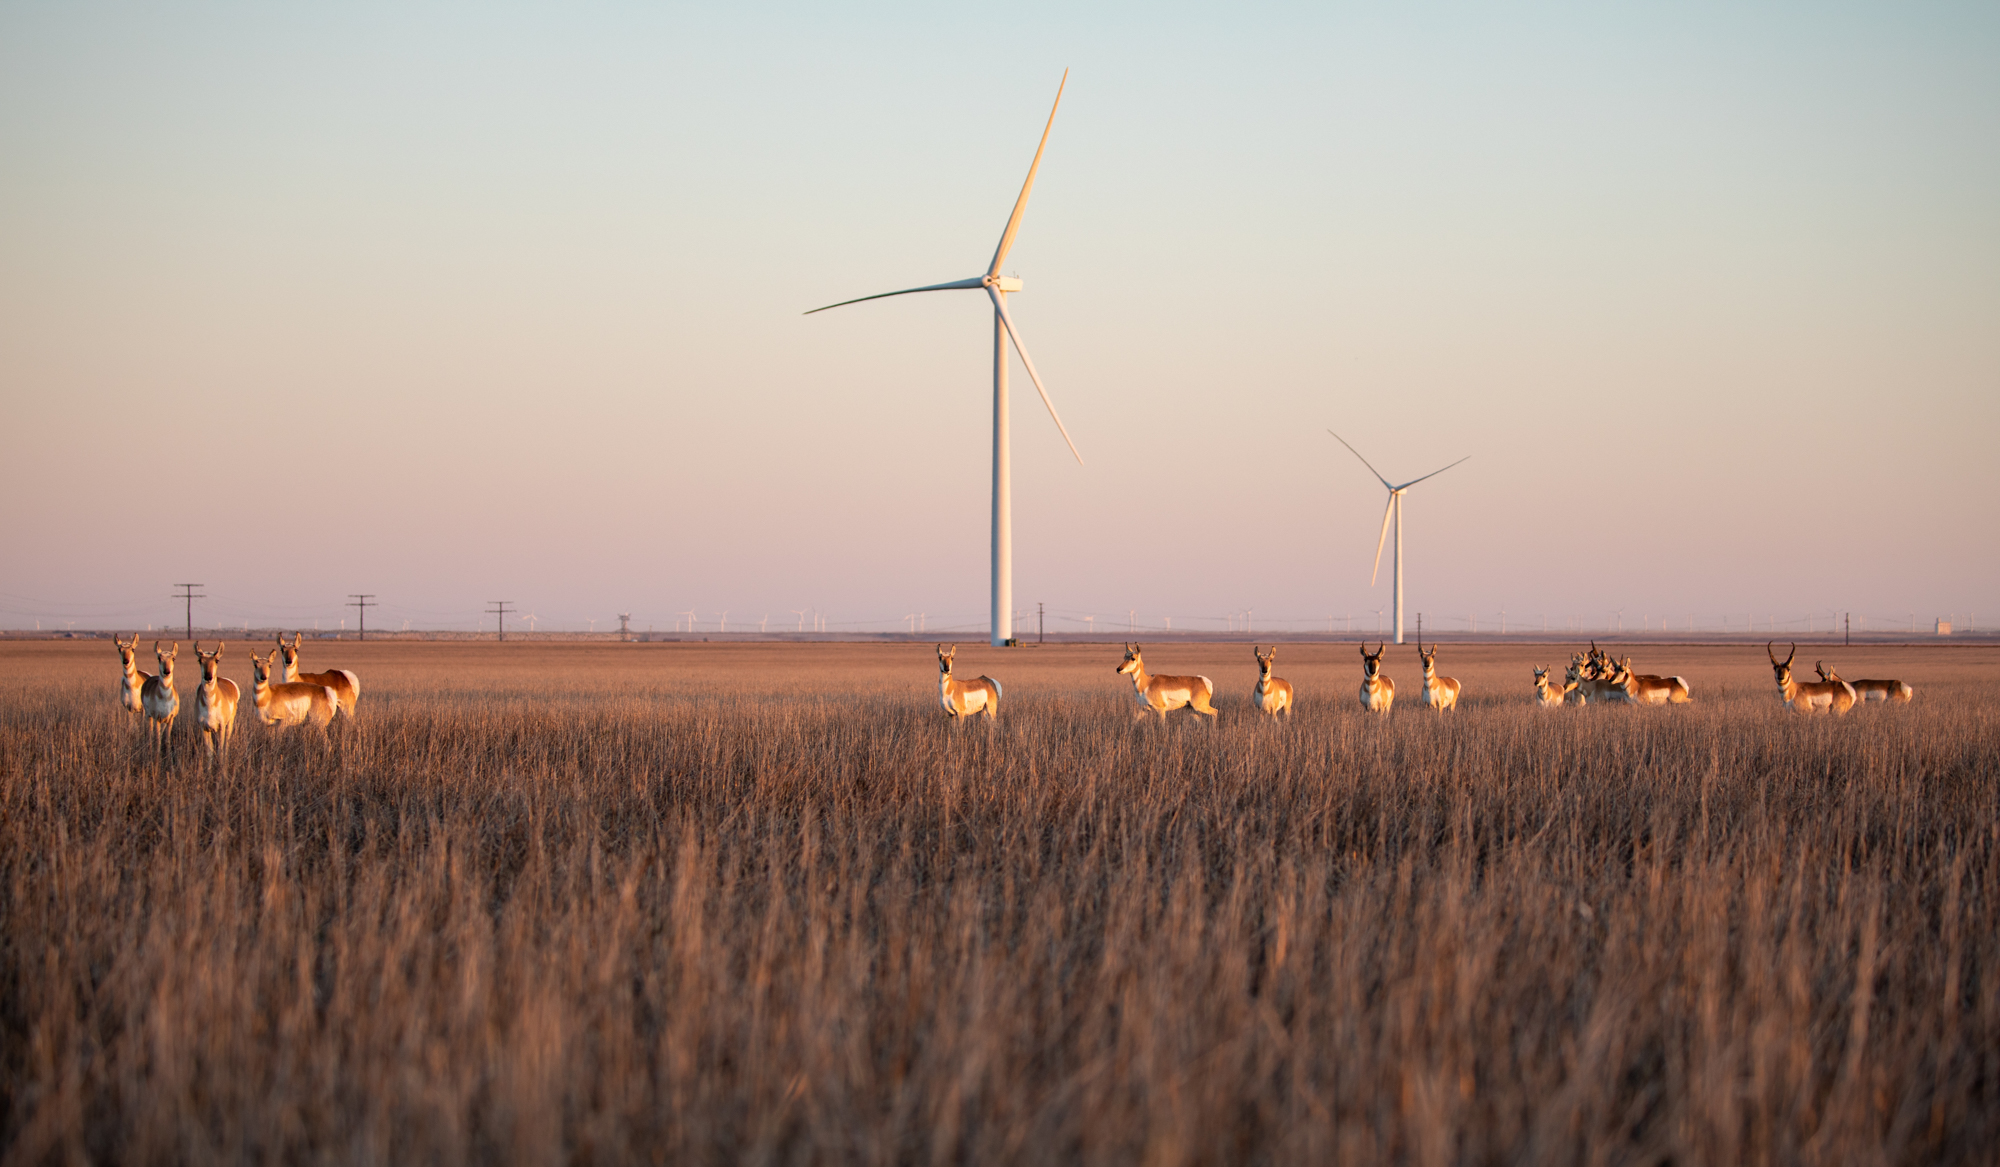 Pronghorn antelope walking past a wind farm.